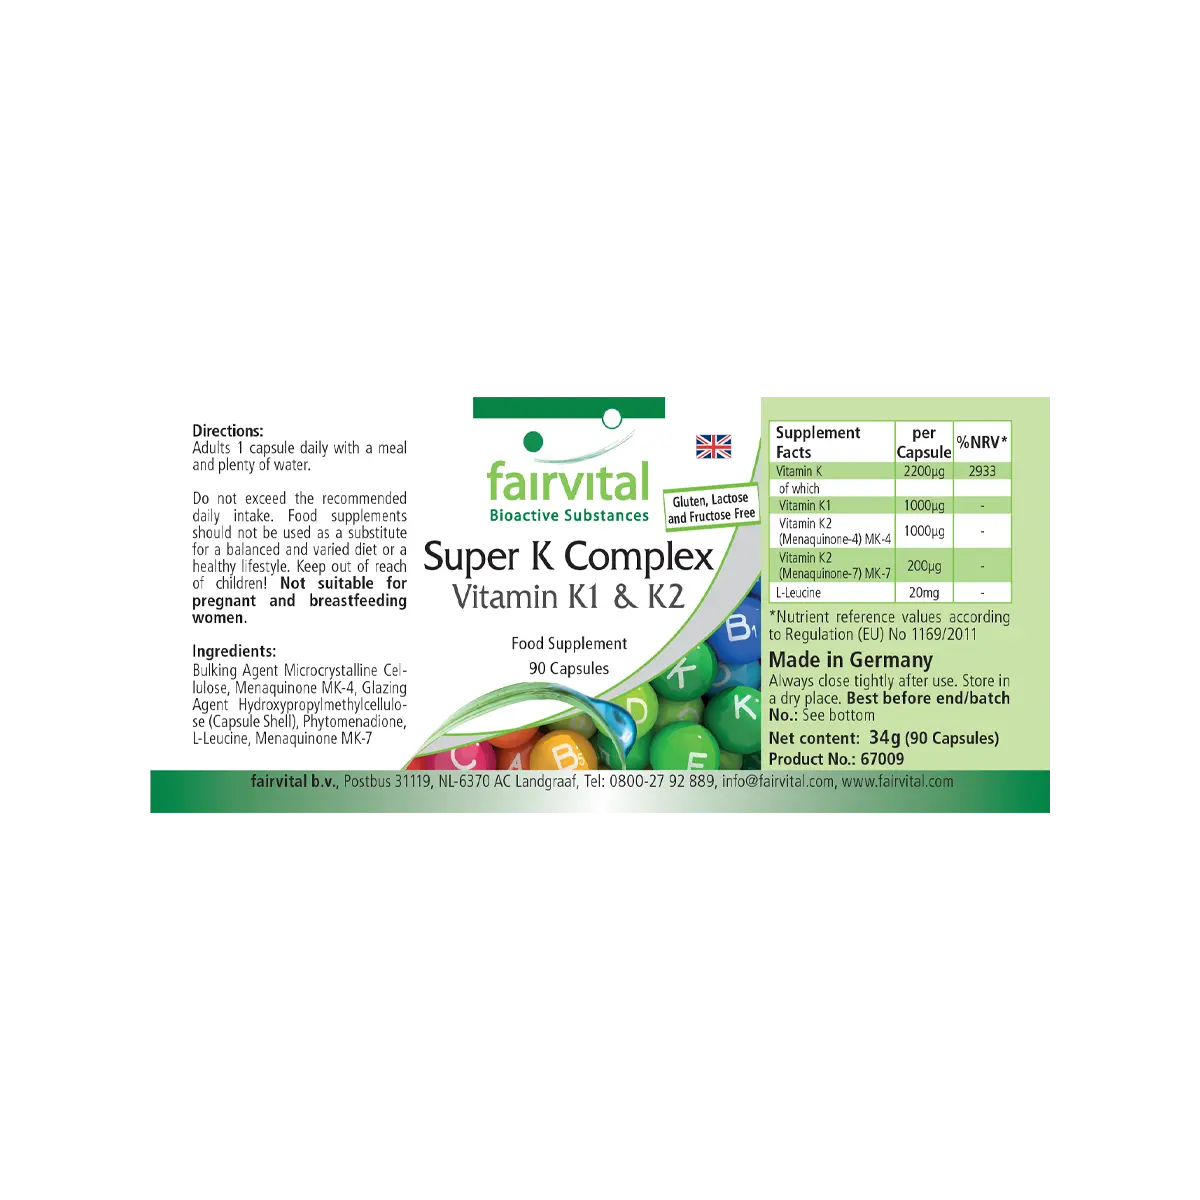 Complexe Super K Vitamine K1 & K2 - 90 gélules